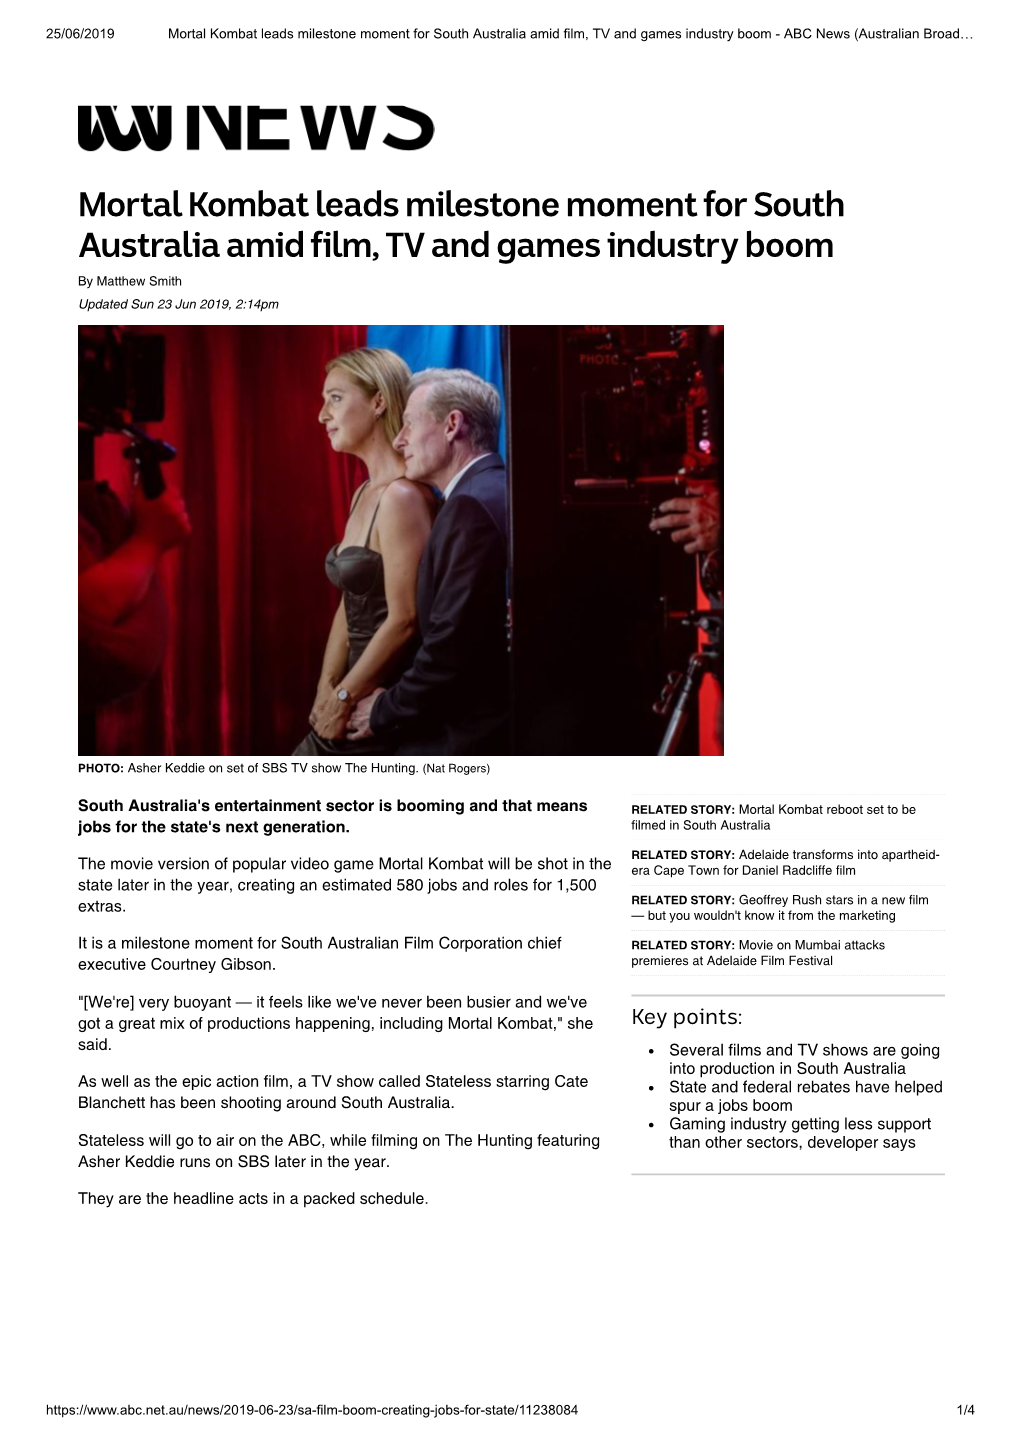 Mortal Kombat Leads Milestone Moment for South Australia Amid Film, TV and Games Industry Boom - ABC News (Australian Broad…